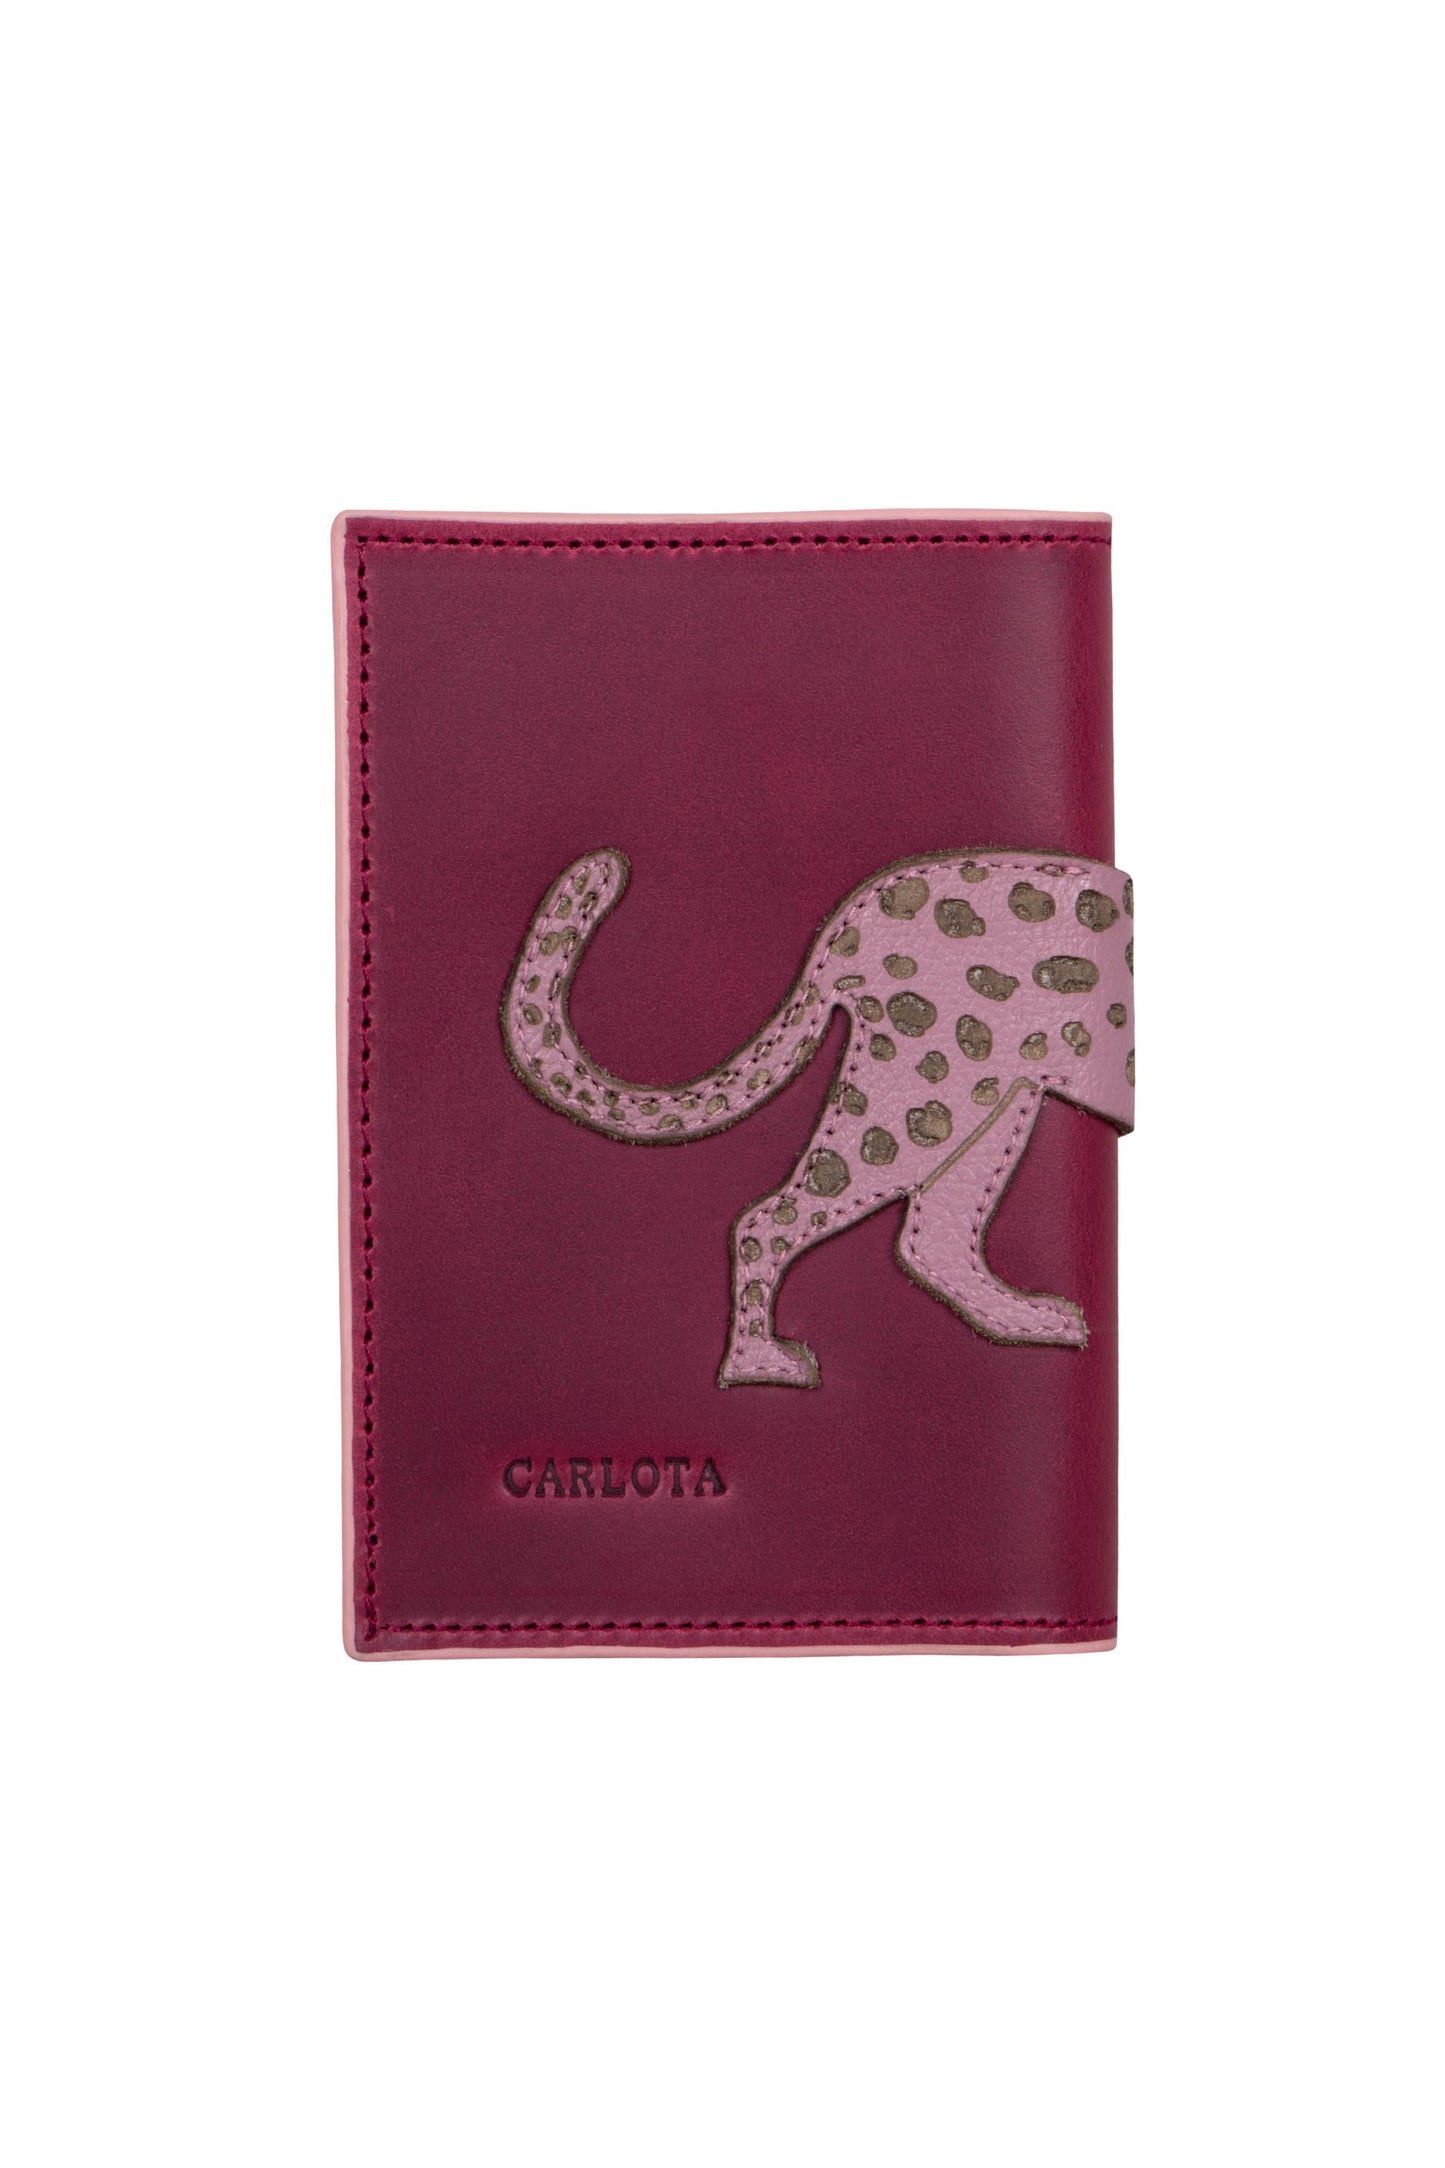 Jaguar Passport Cover